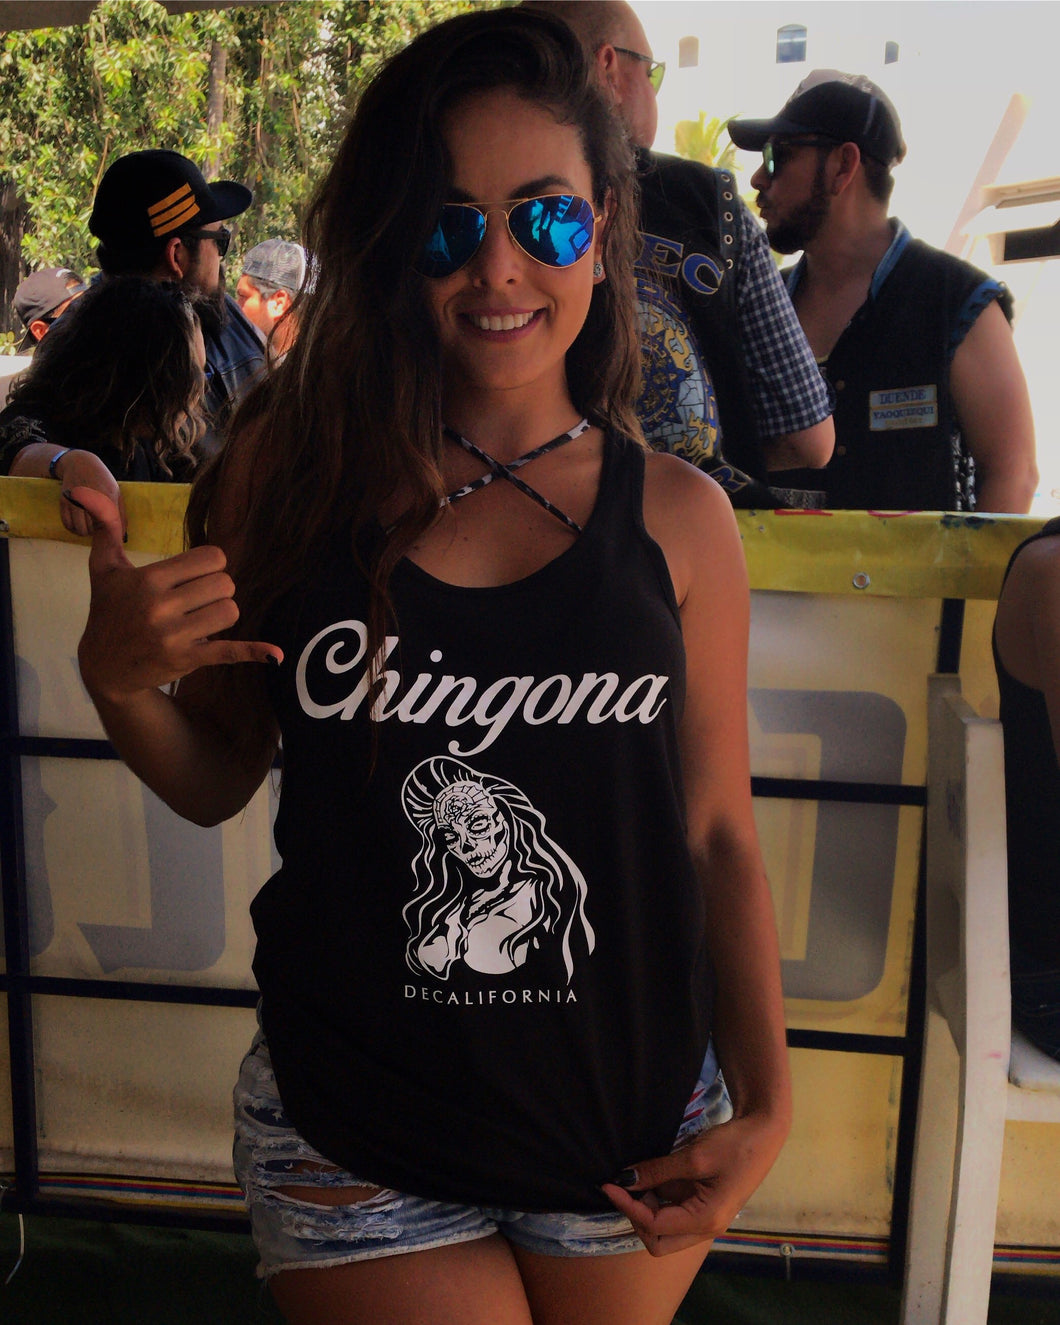 Chingona DeCalifornia Tank-top!